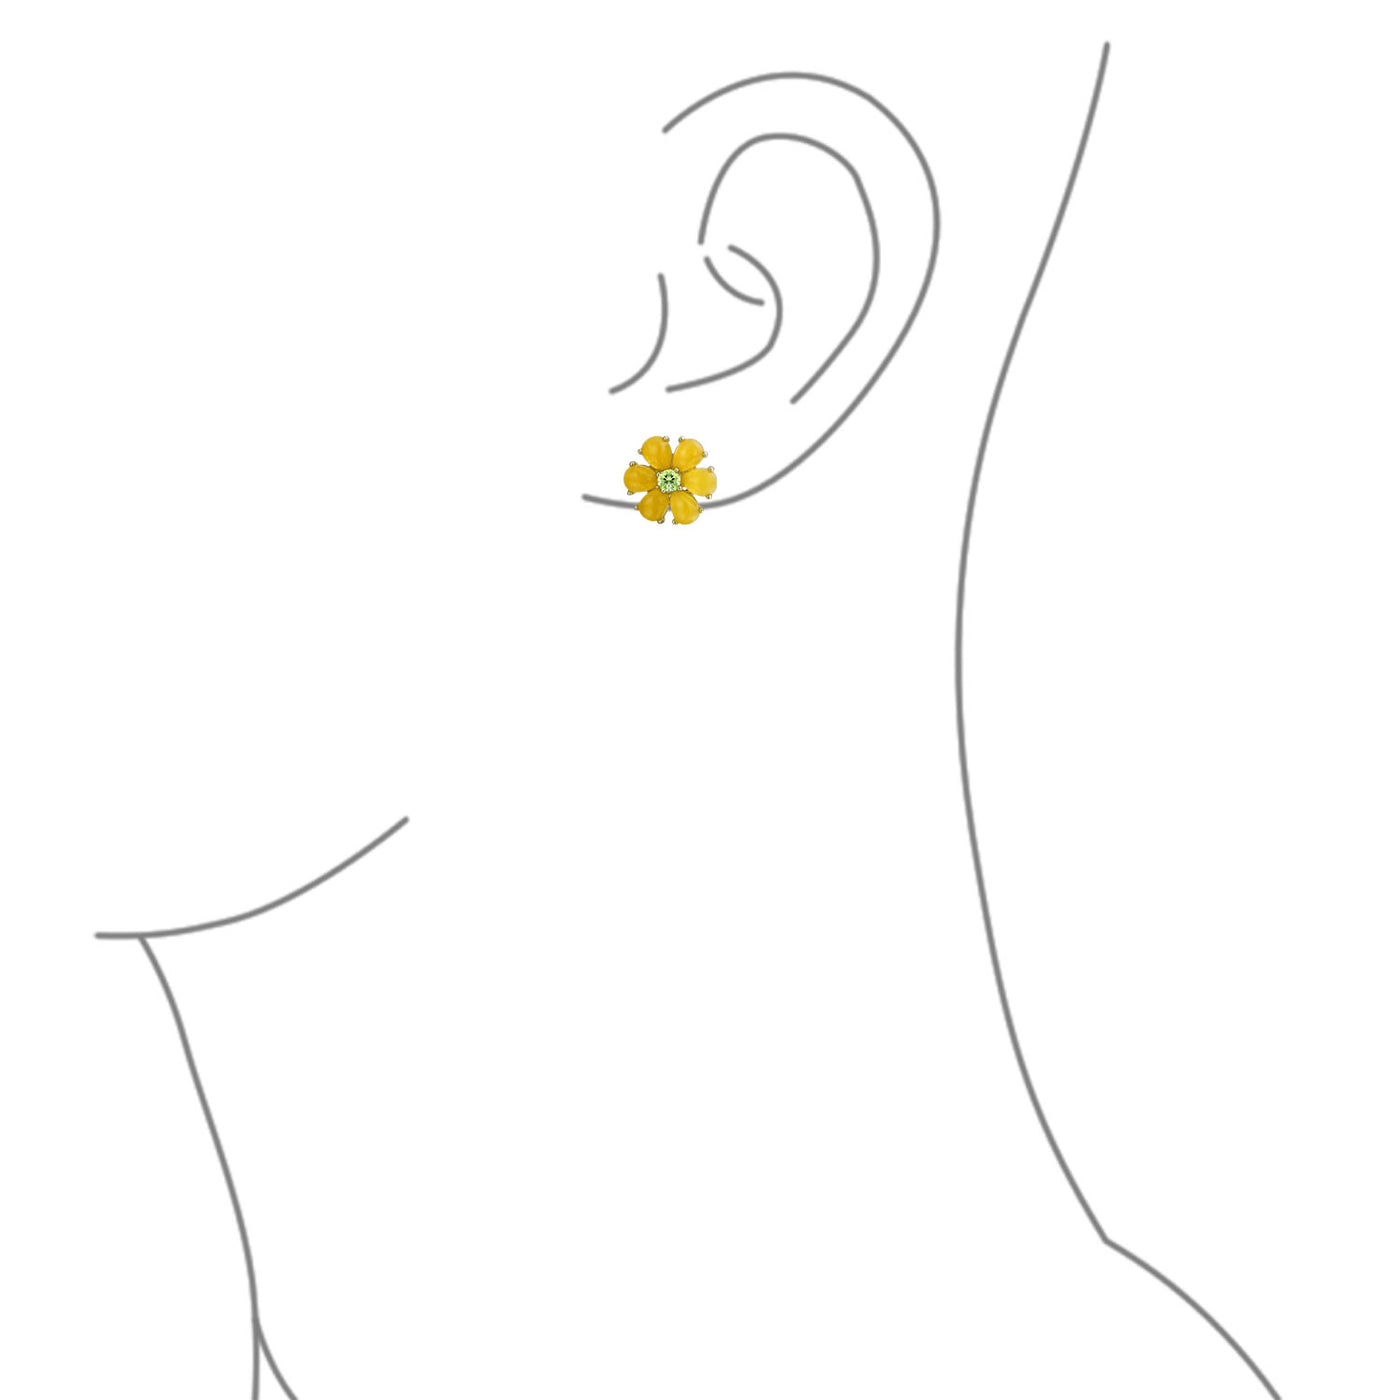 Lemon Yellow Quartz Garden Flower Green CZ Stud Earrings Gold Plated